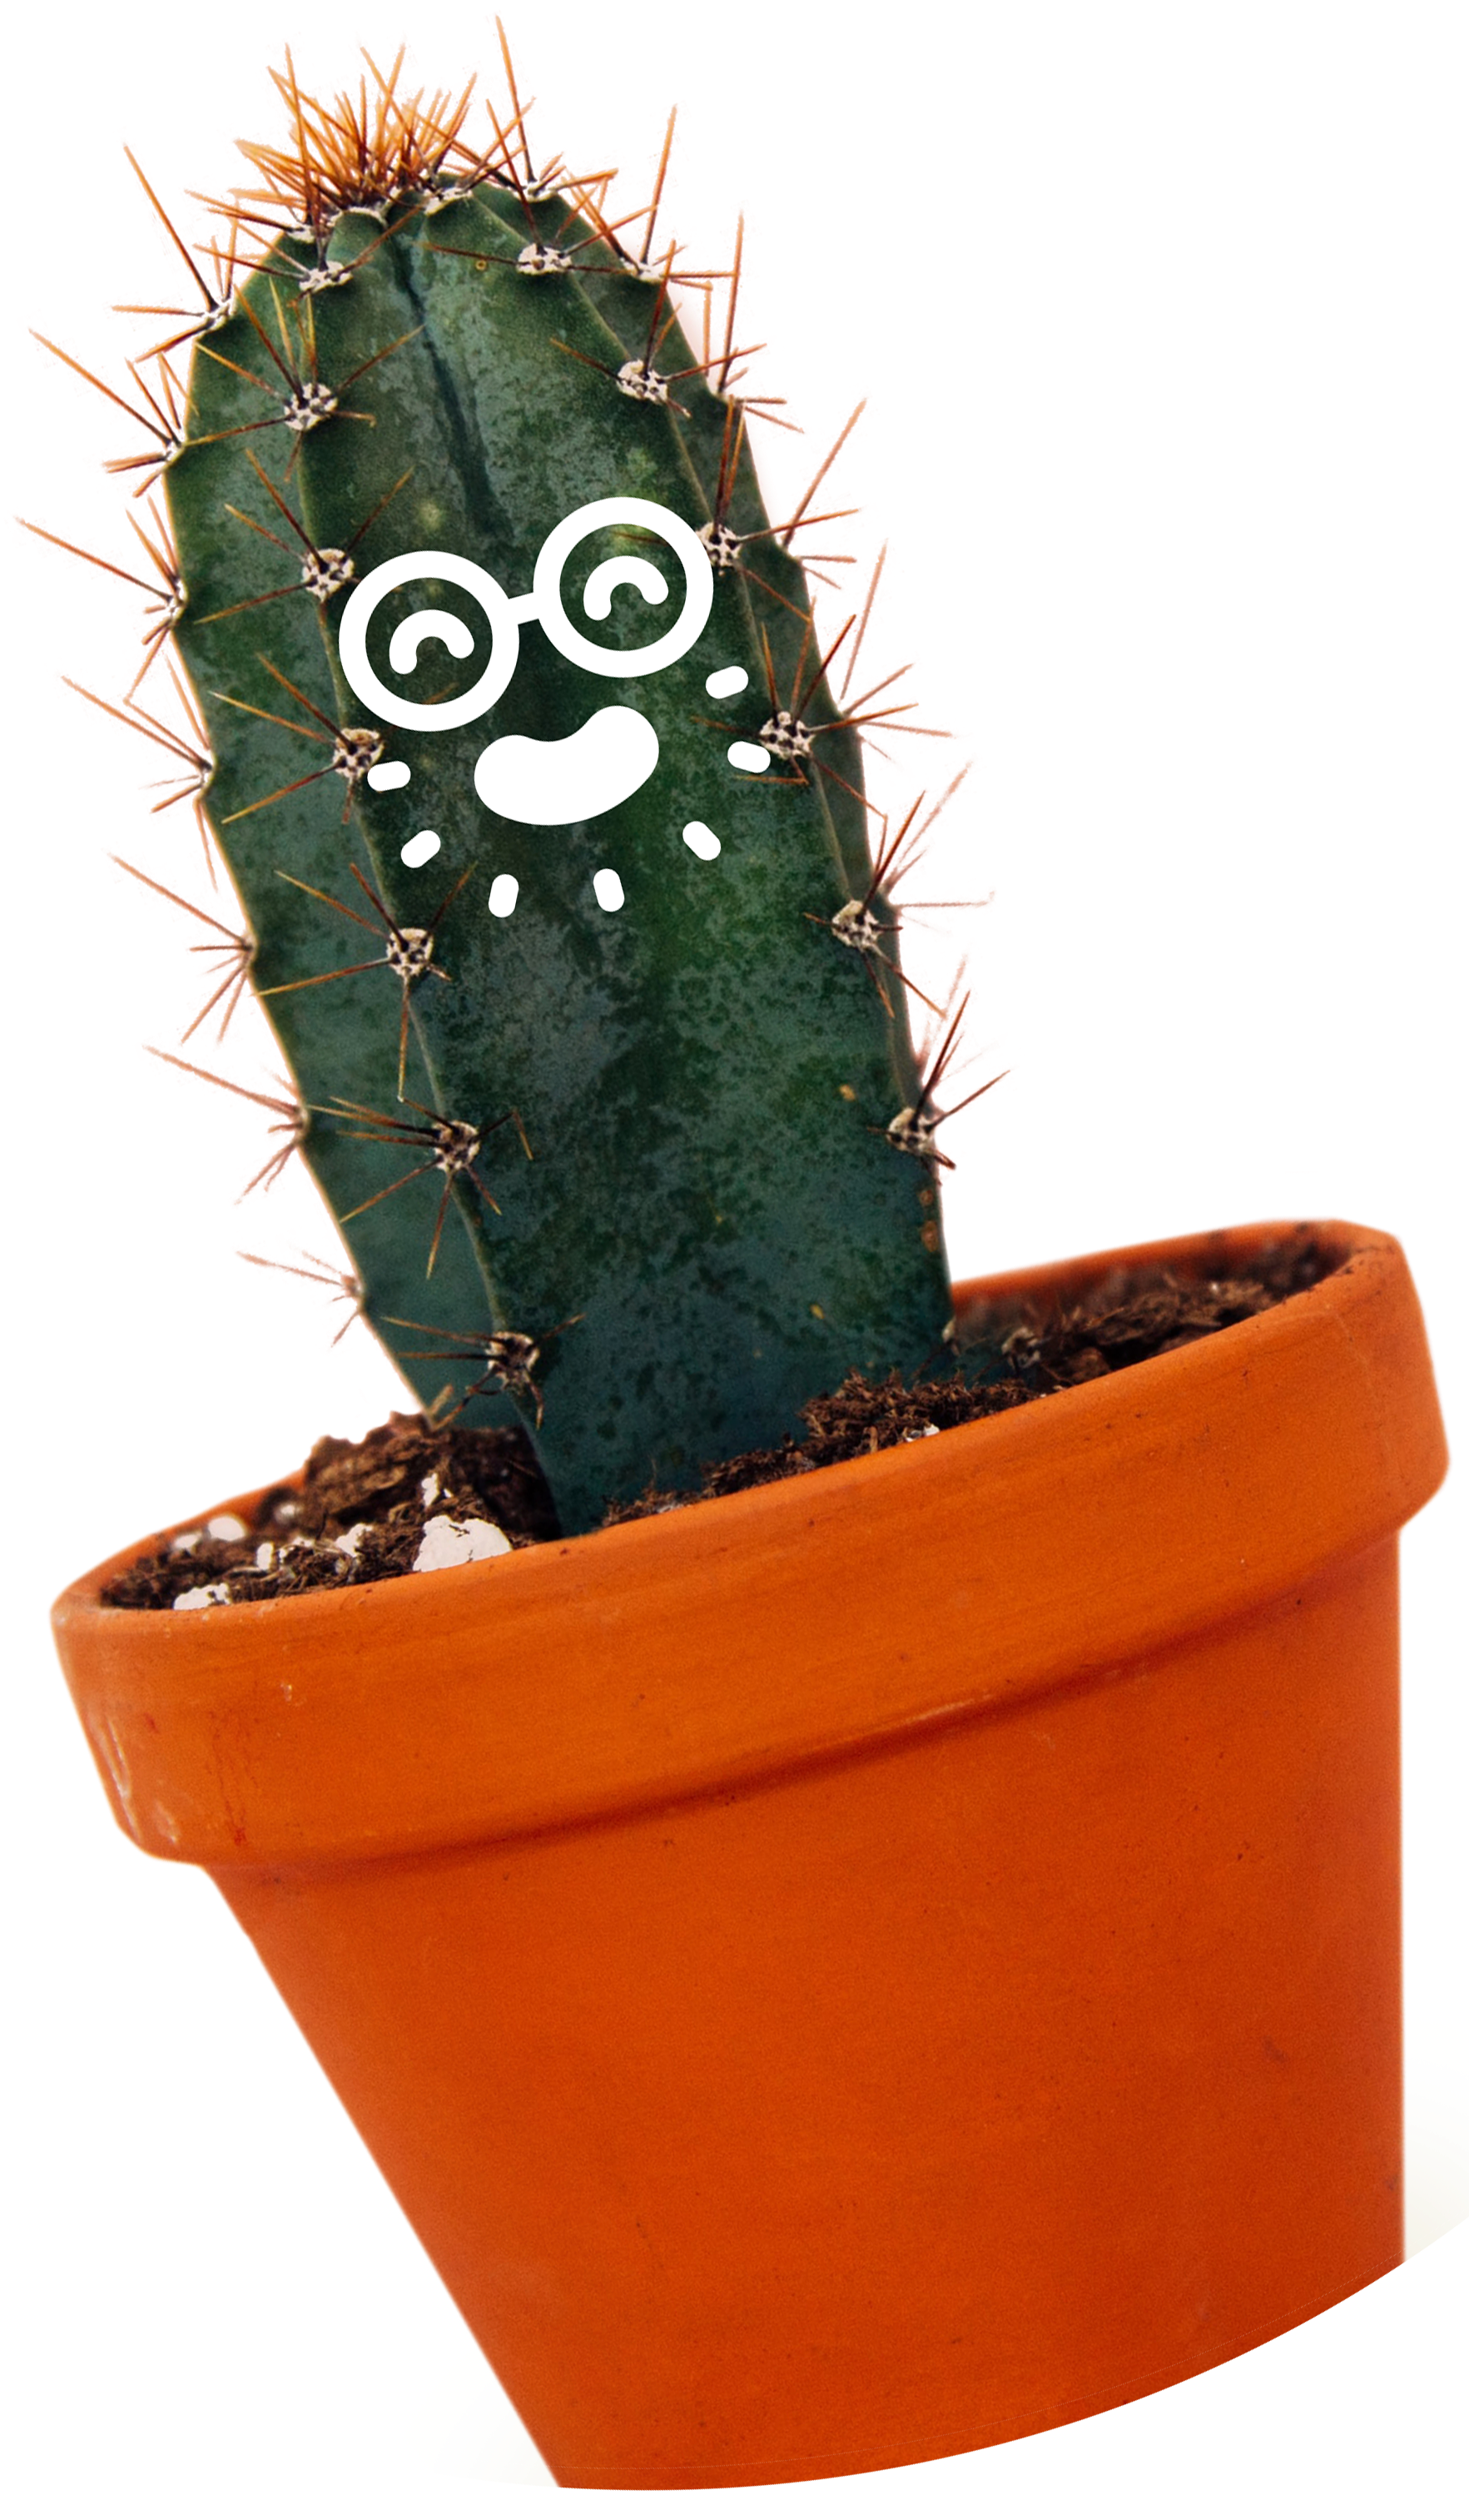 Funny cactus photograph